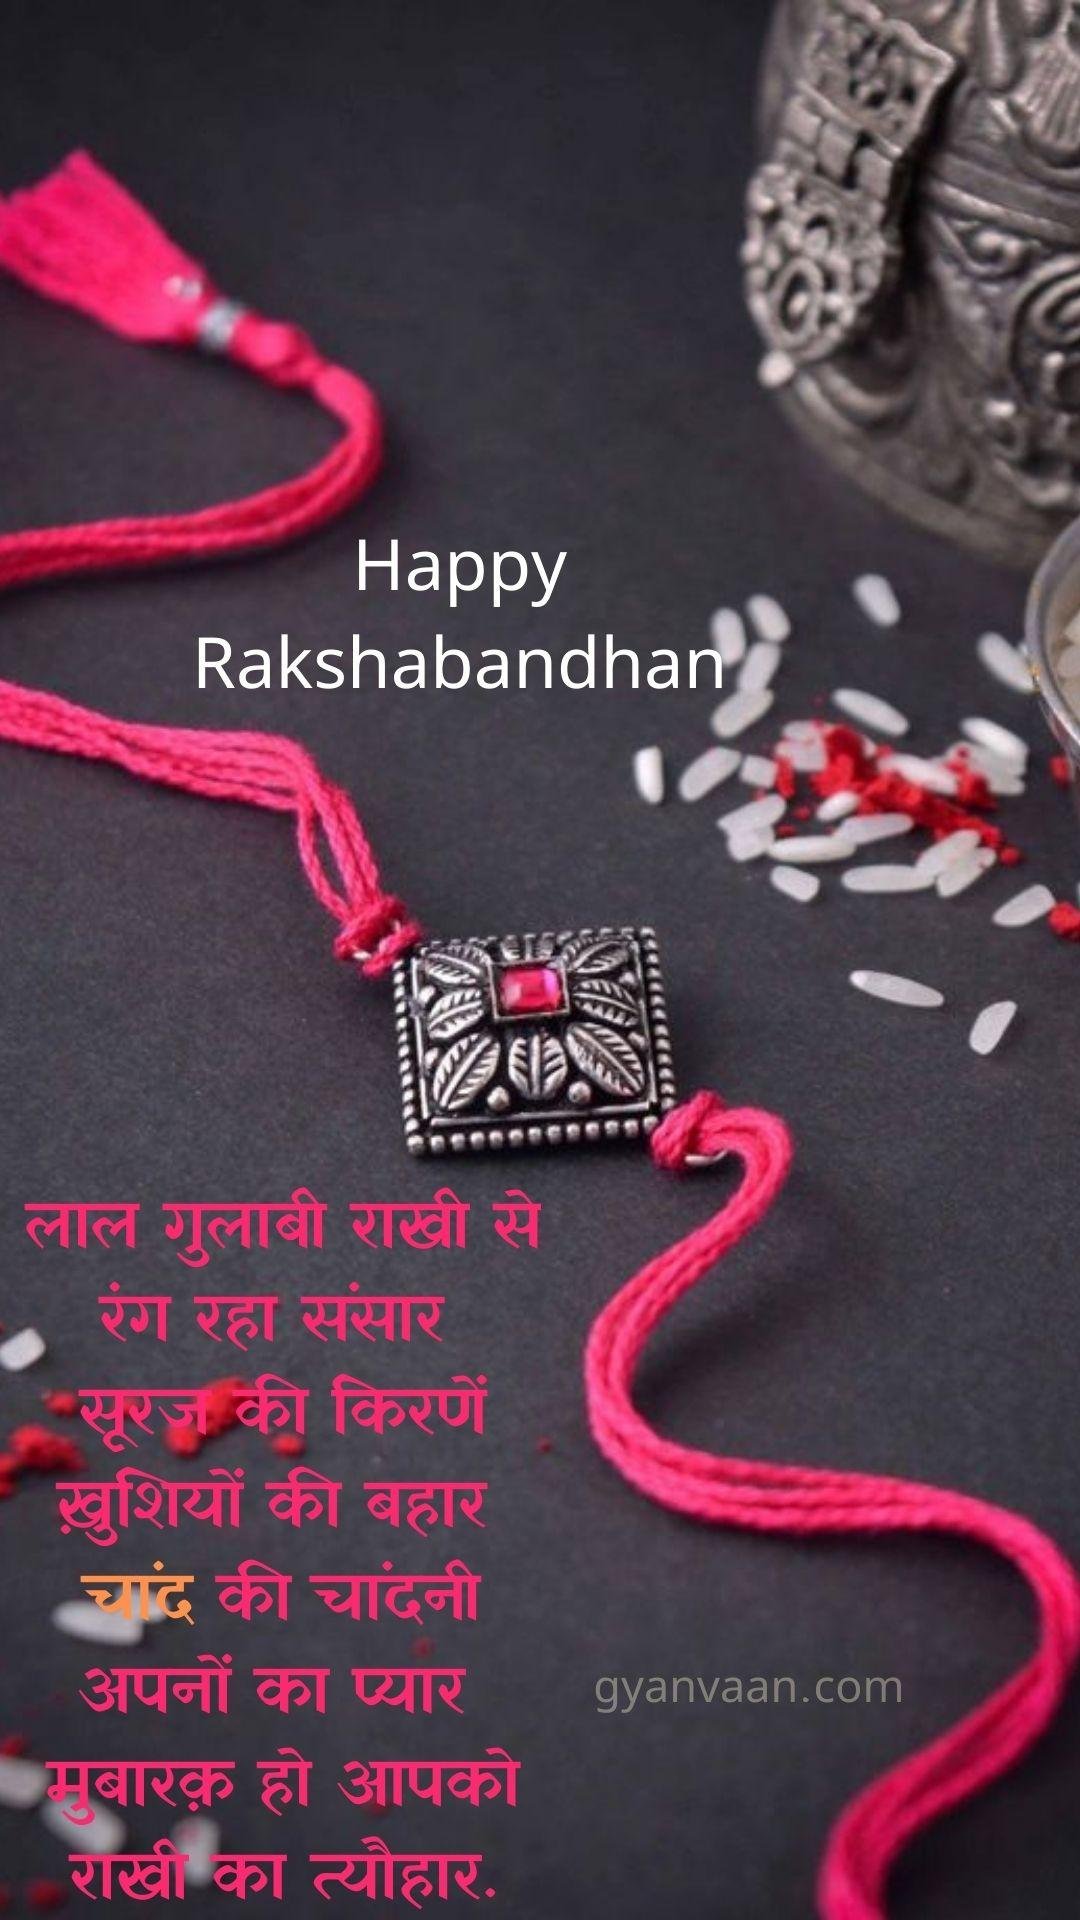 Raksha Bandhan Quotes Status Shayari And Wishes In Hindi For Mobile Devices 11 - Raksha Bandhan Quotes